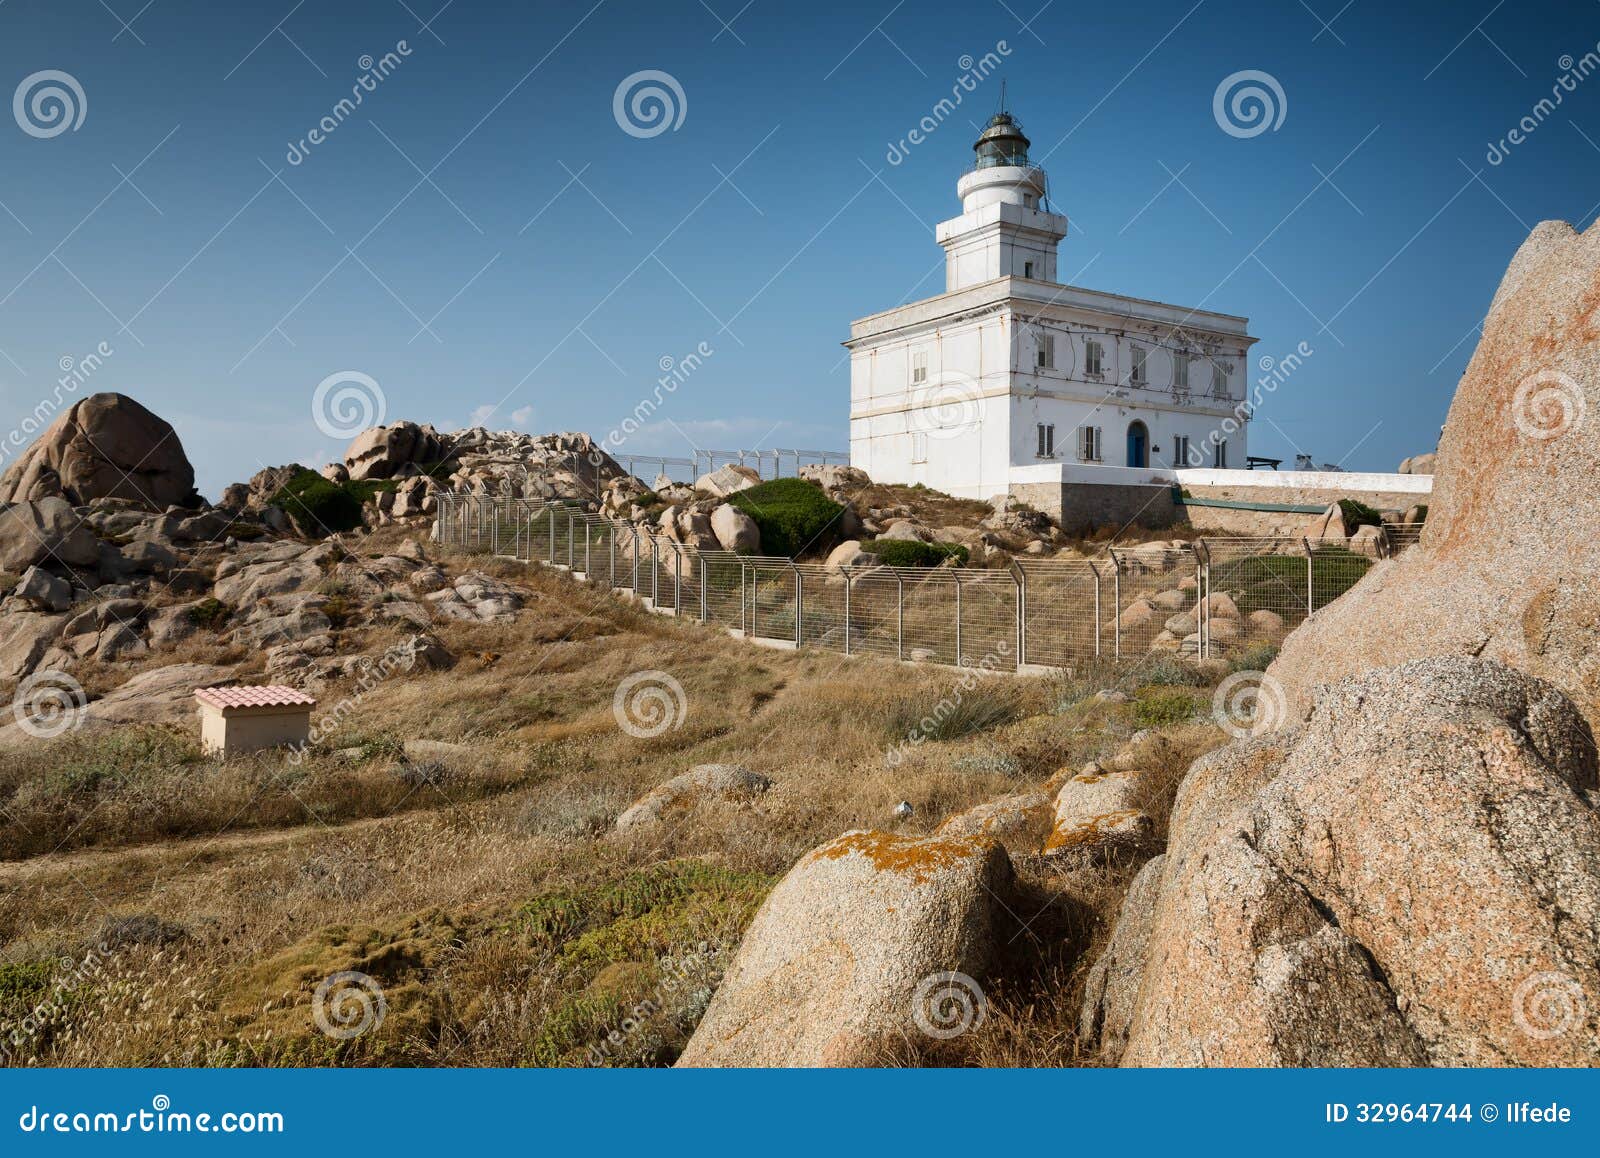 lighthouse at the capo testa, sardinia, italy